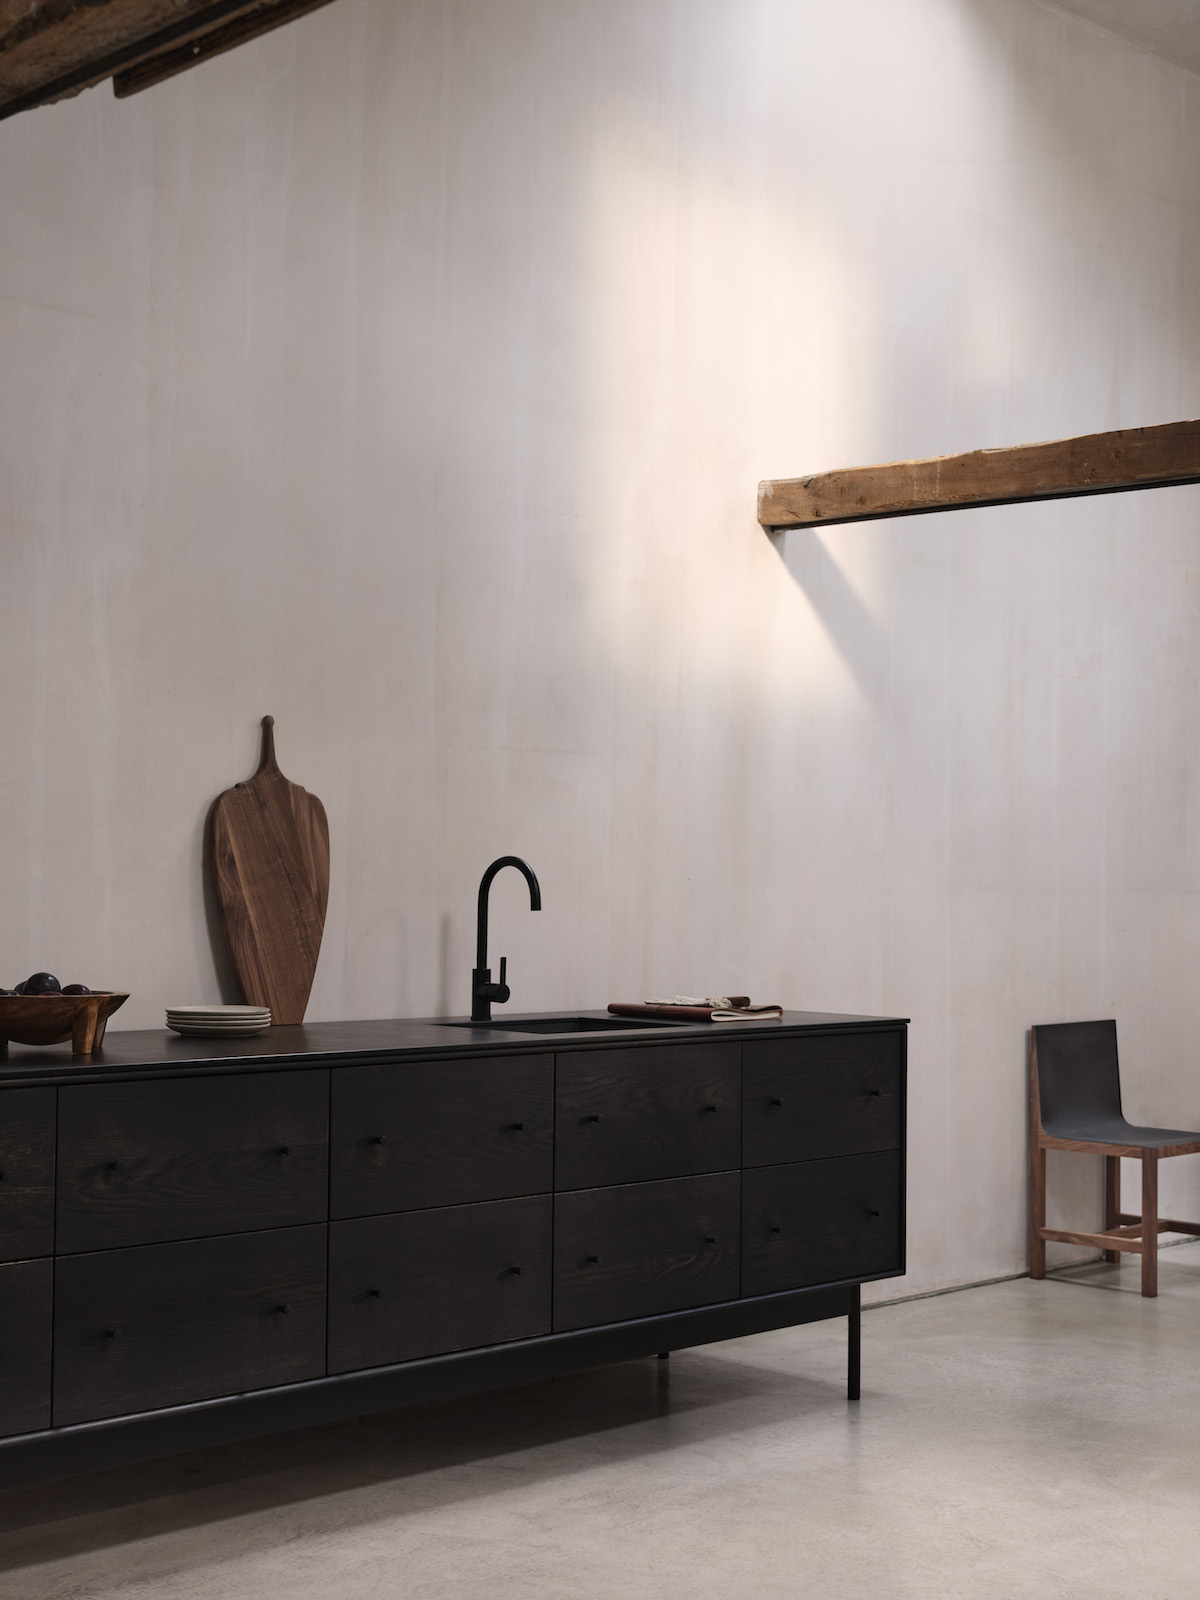 Edward Collinson design studio Black kitchen and white ash Note table